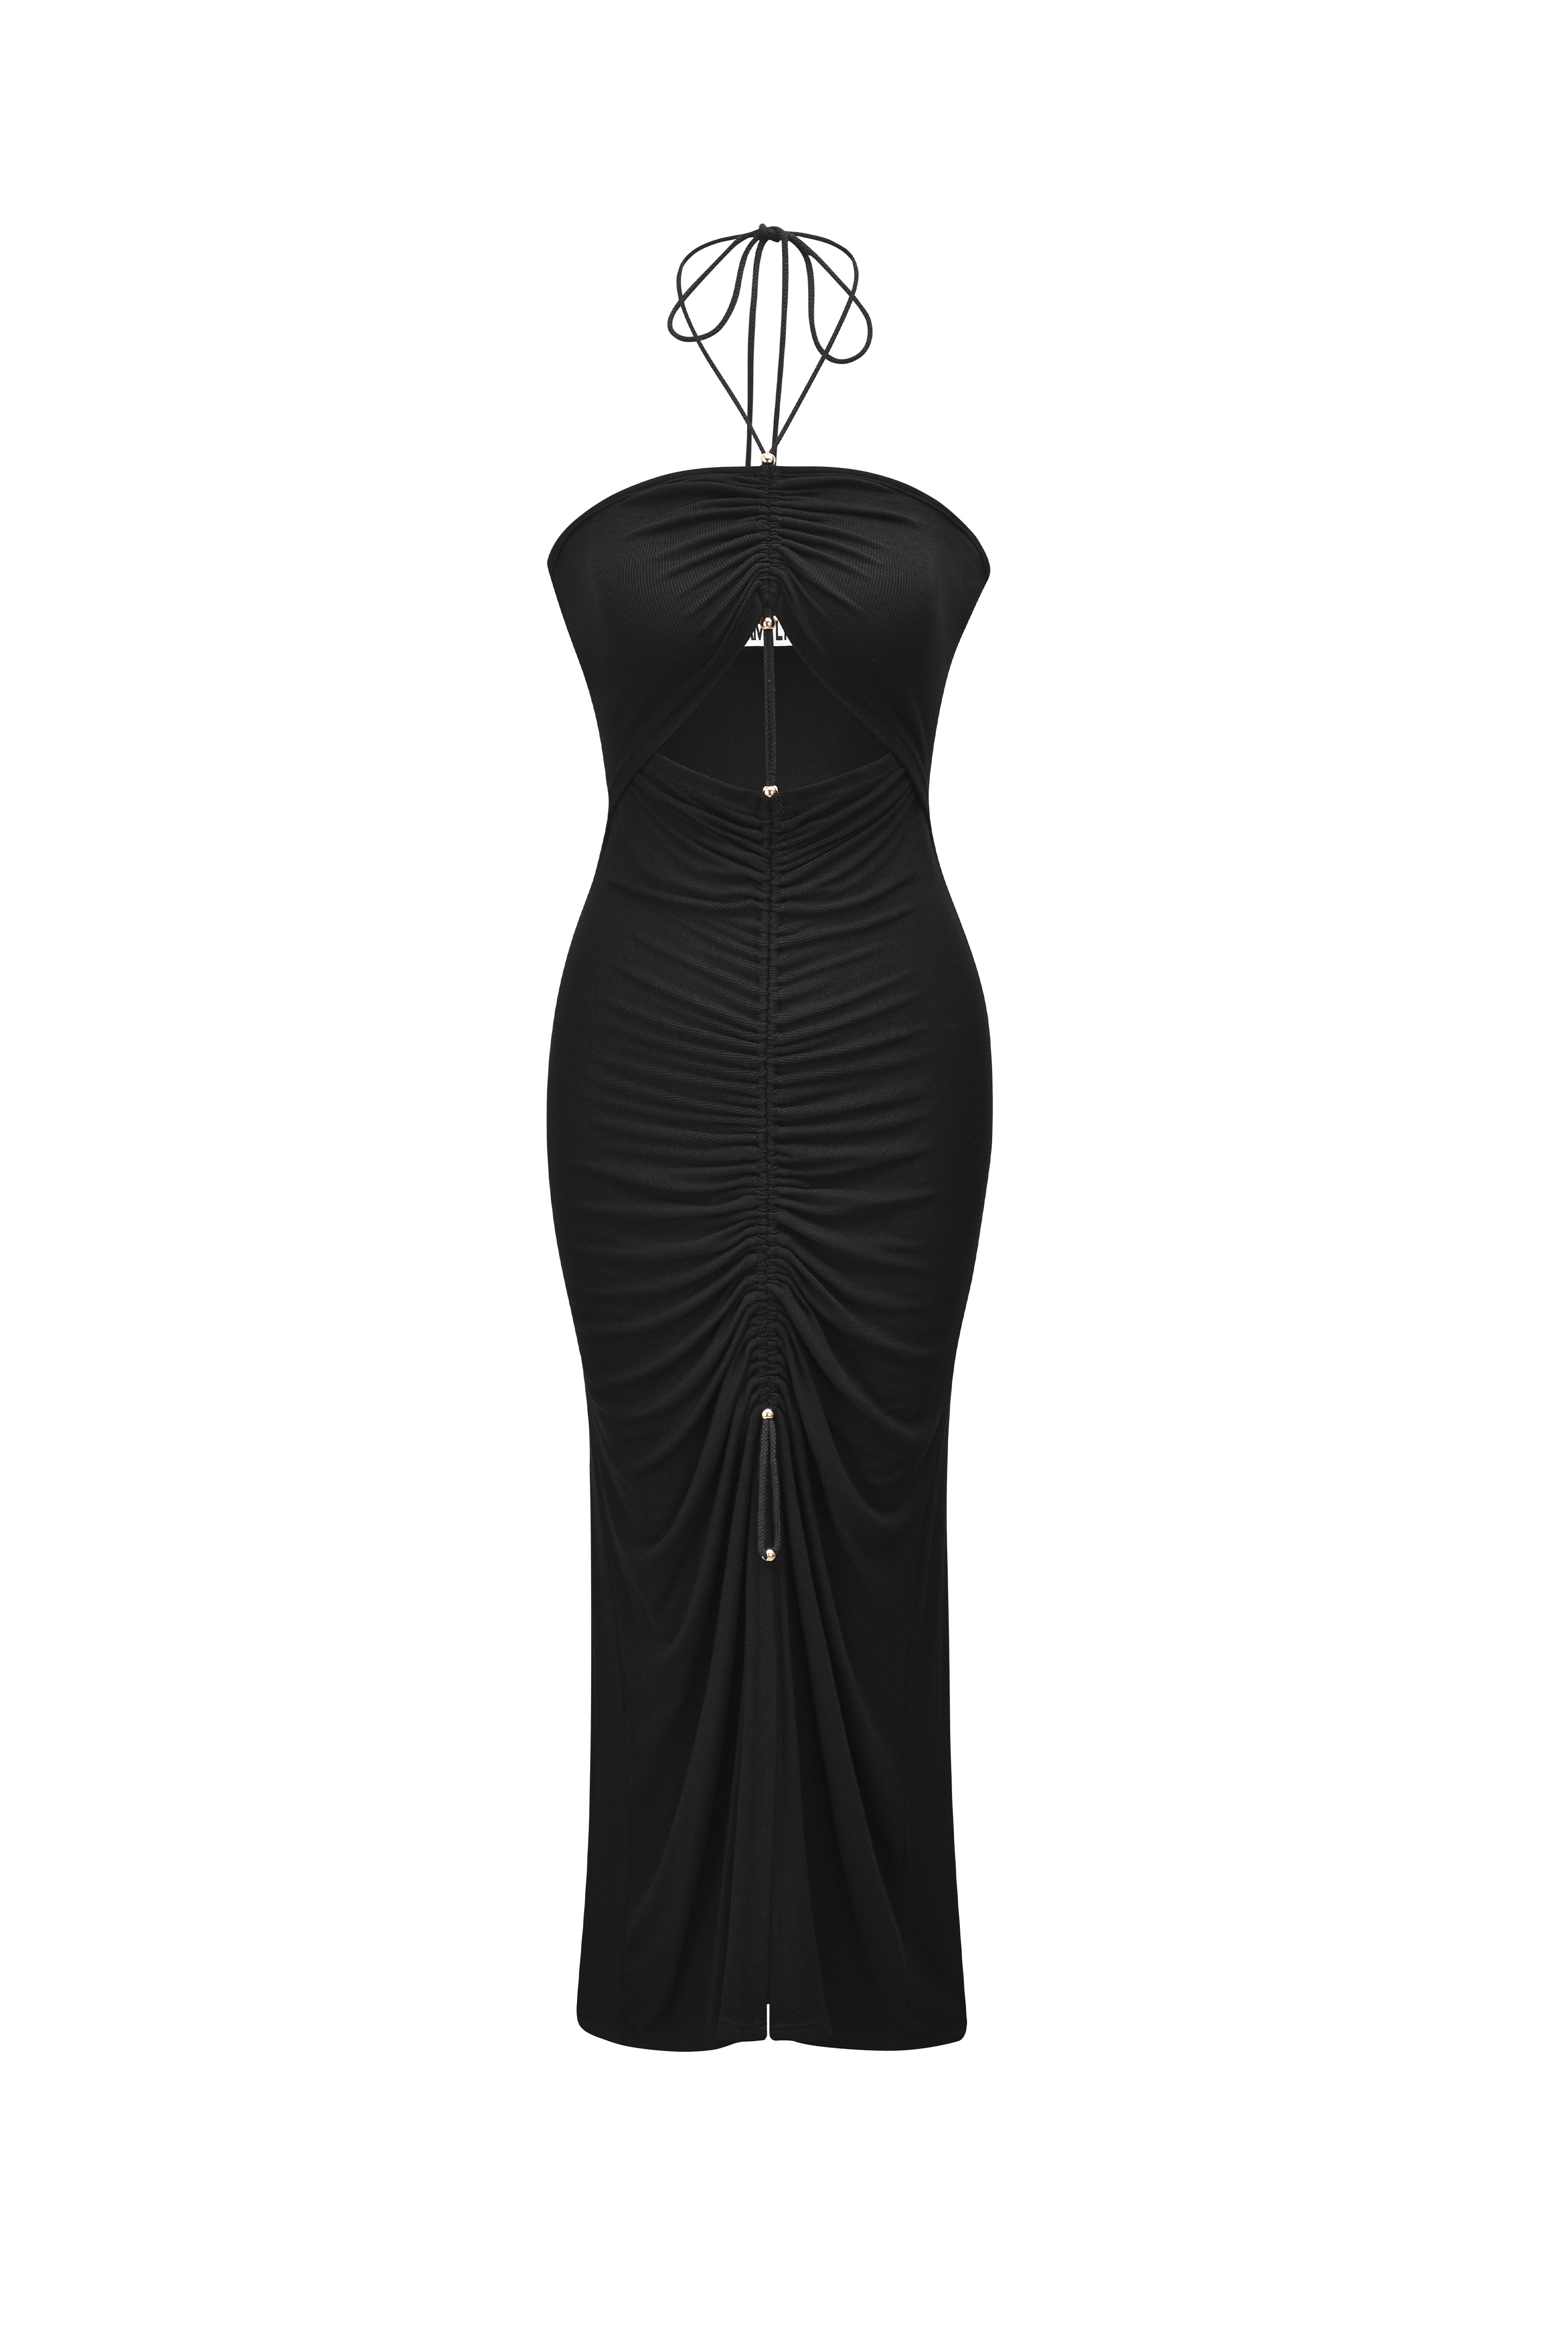 Amy Lynn Women's Vega Black Jersey Cut-out Dress